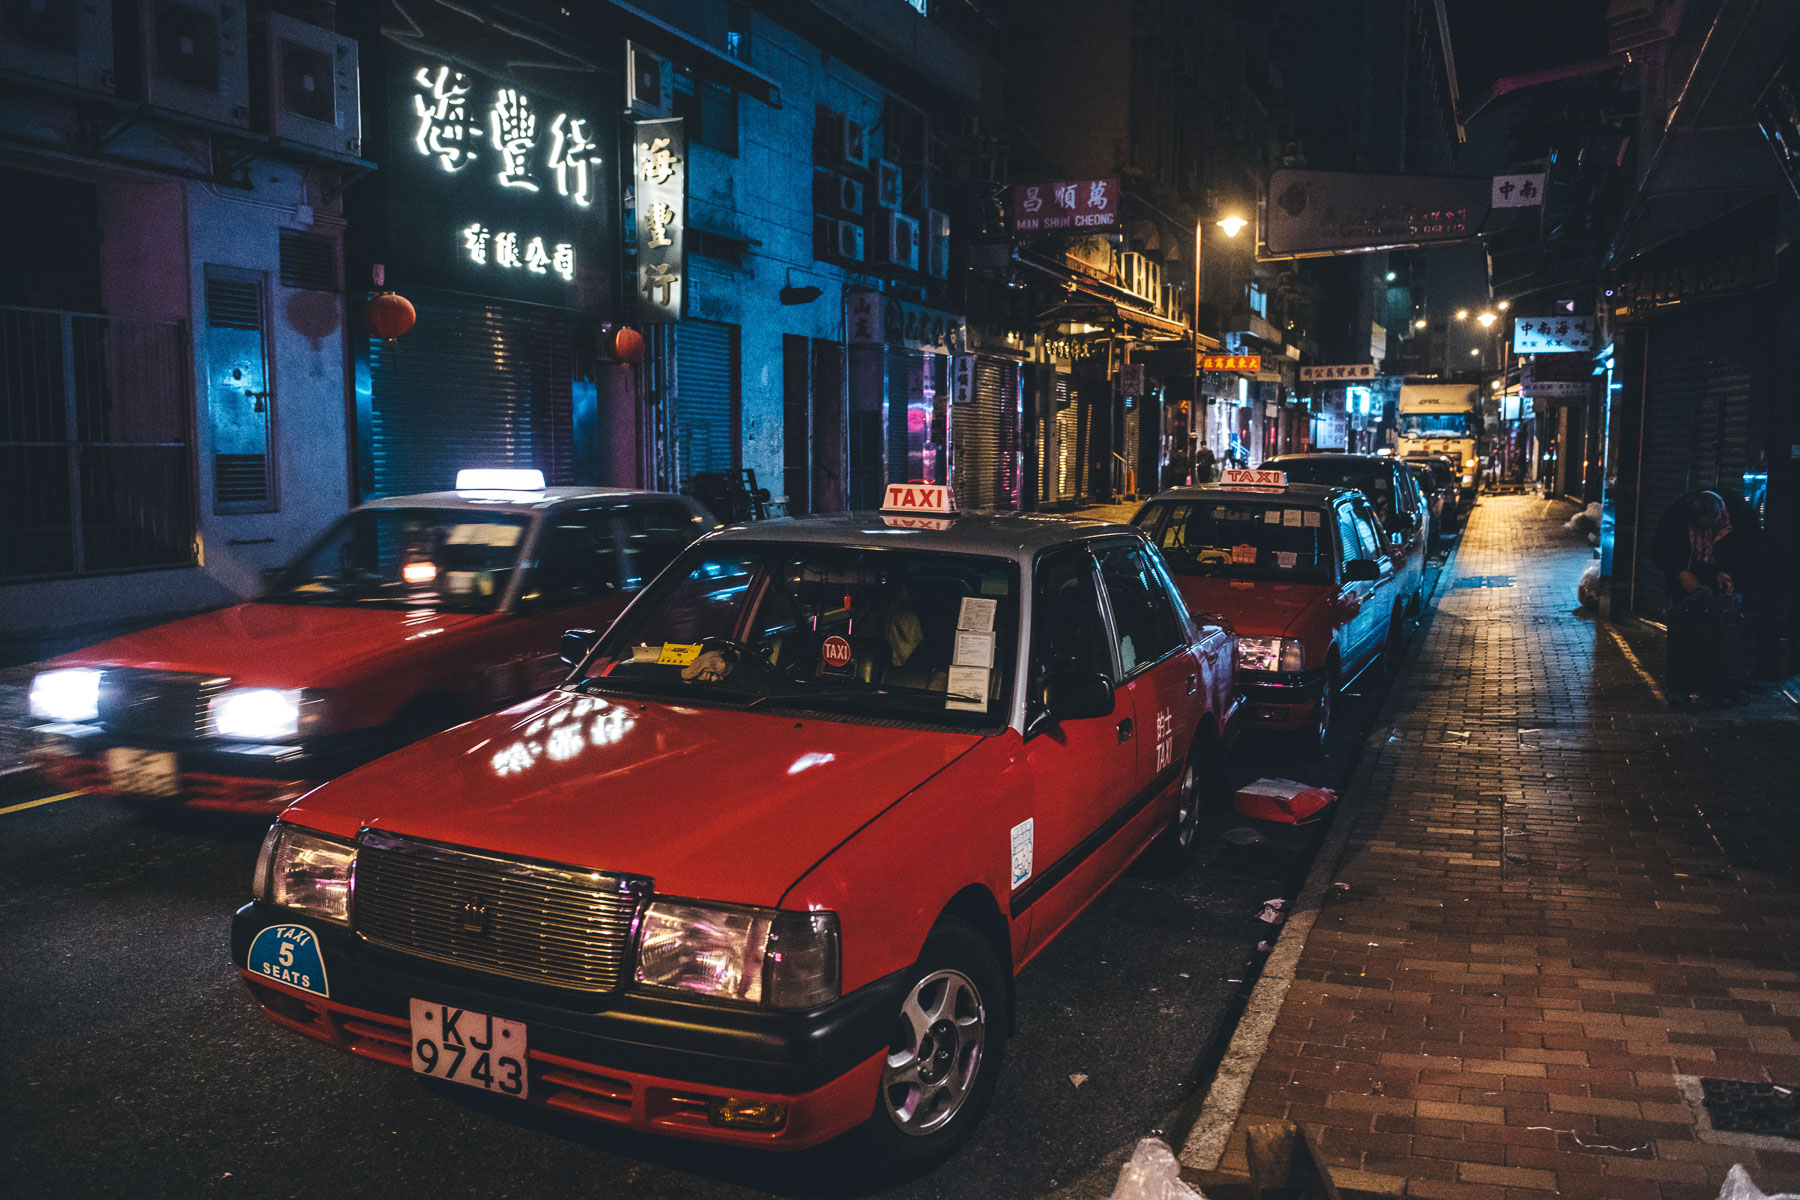 hong kong taxis taken on leica m 10